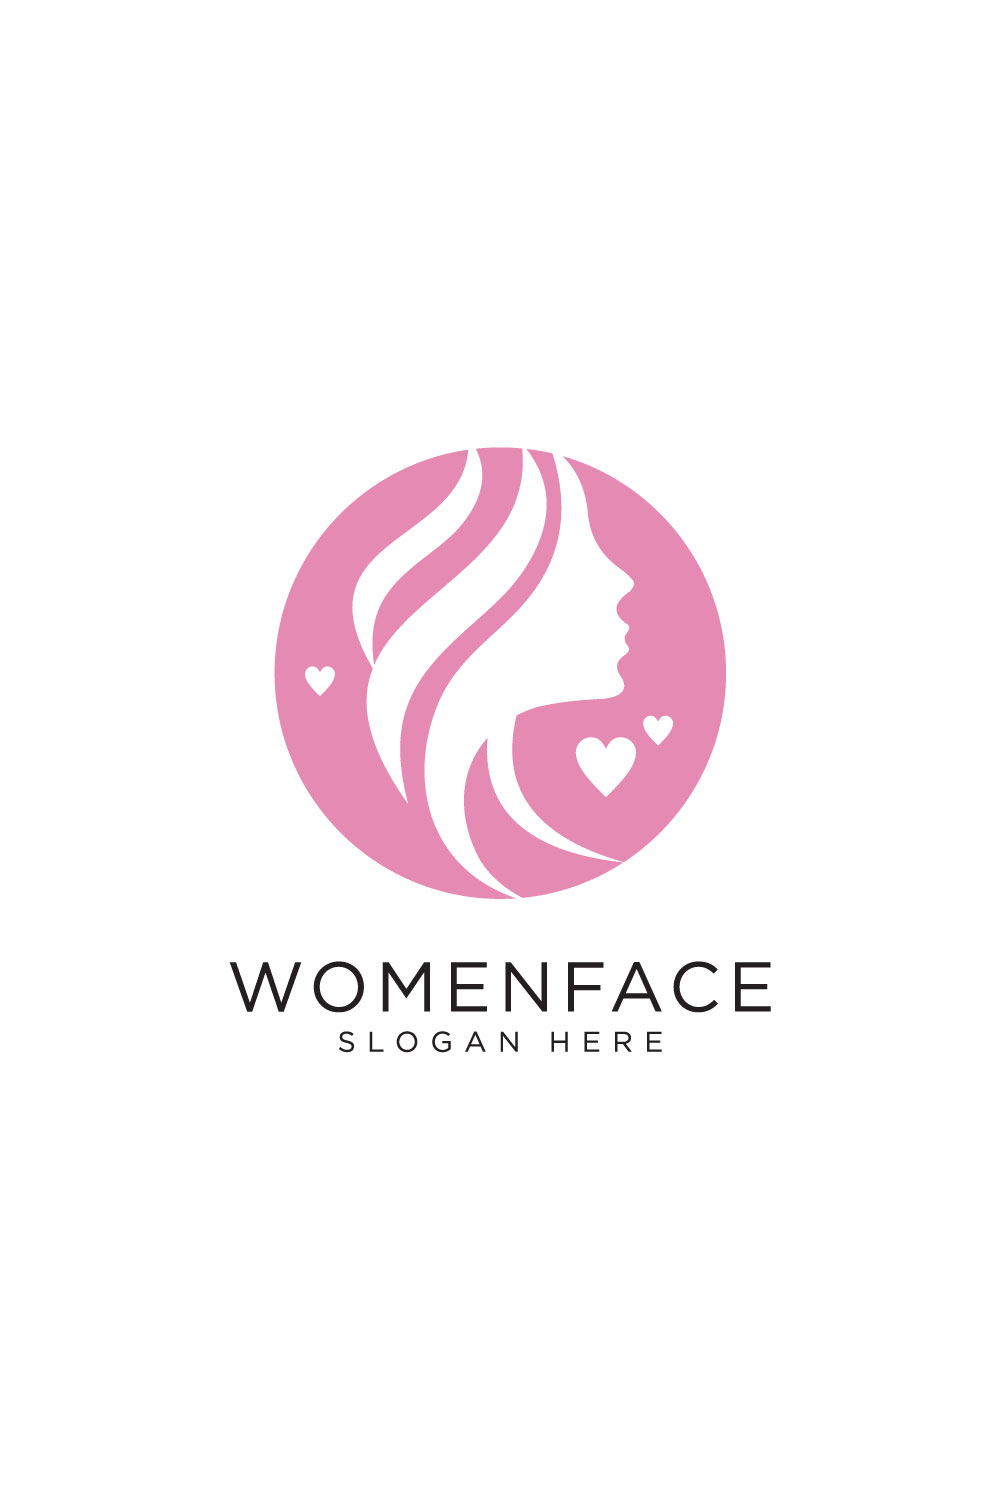 Beauty Salon Woman Face Logo Template » Design a Lot